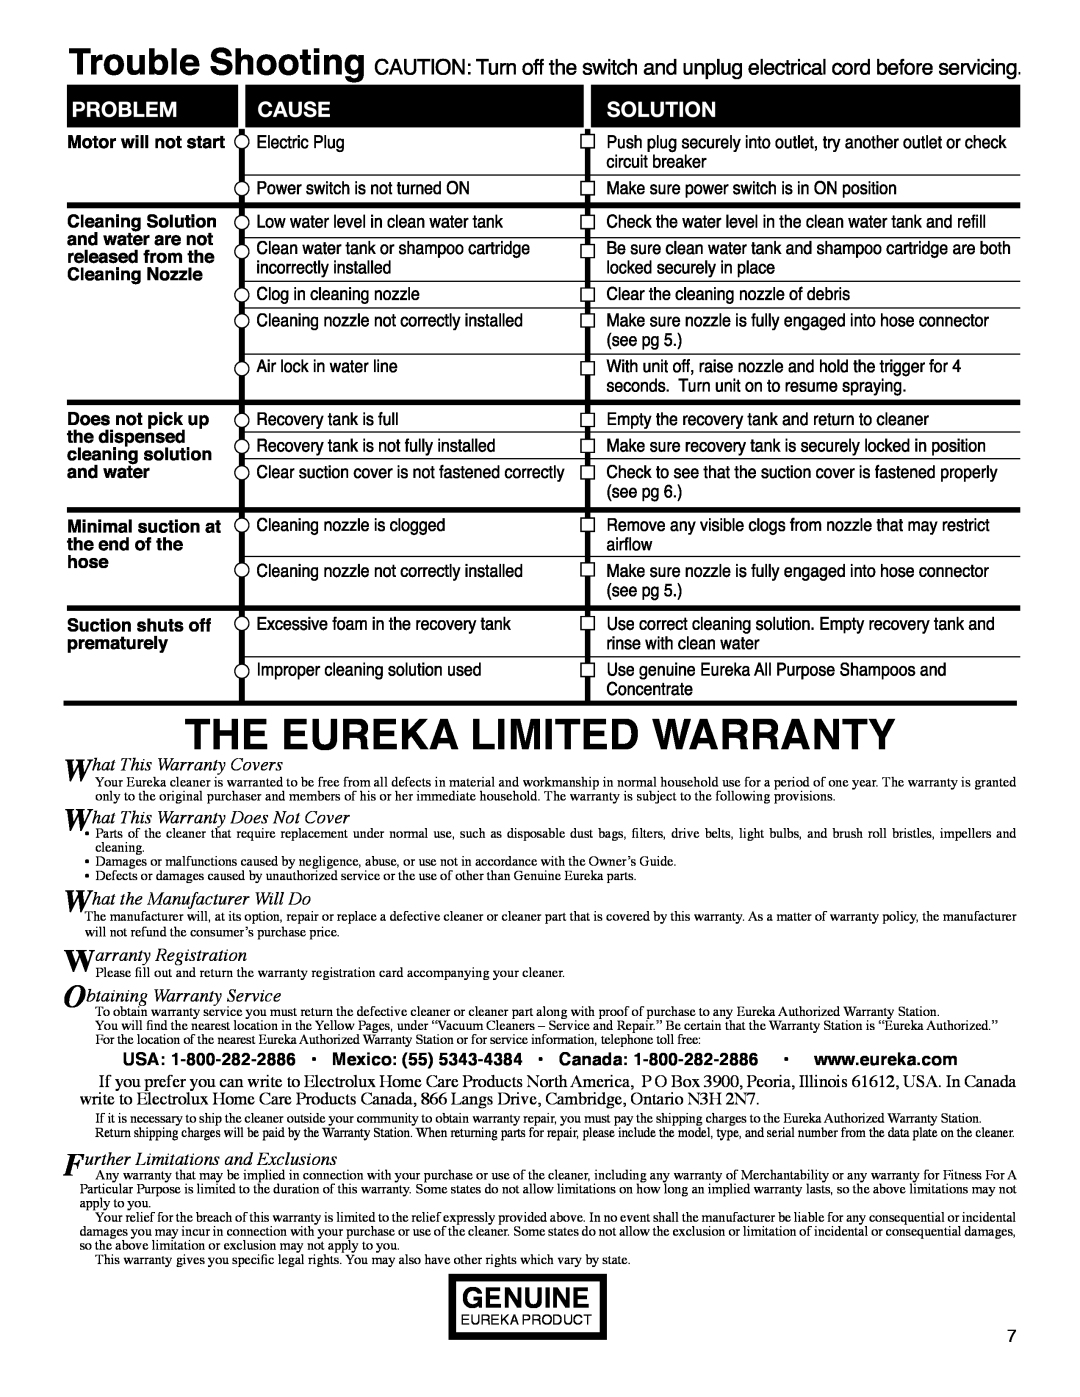 Eureka 2550 manual The Eureka Limited Warranty, Genuine, What This Warranty Covers, What This Warranty Does Not Cover 